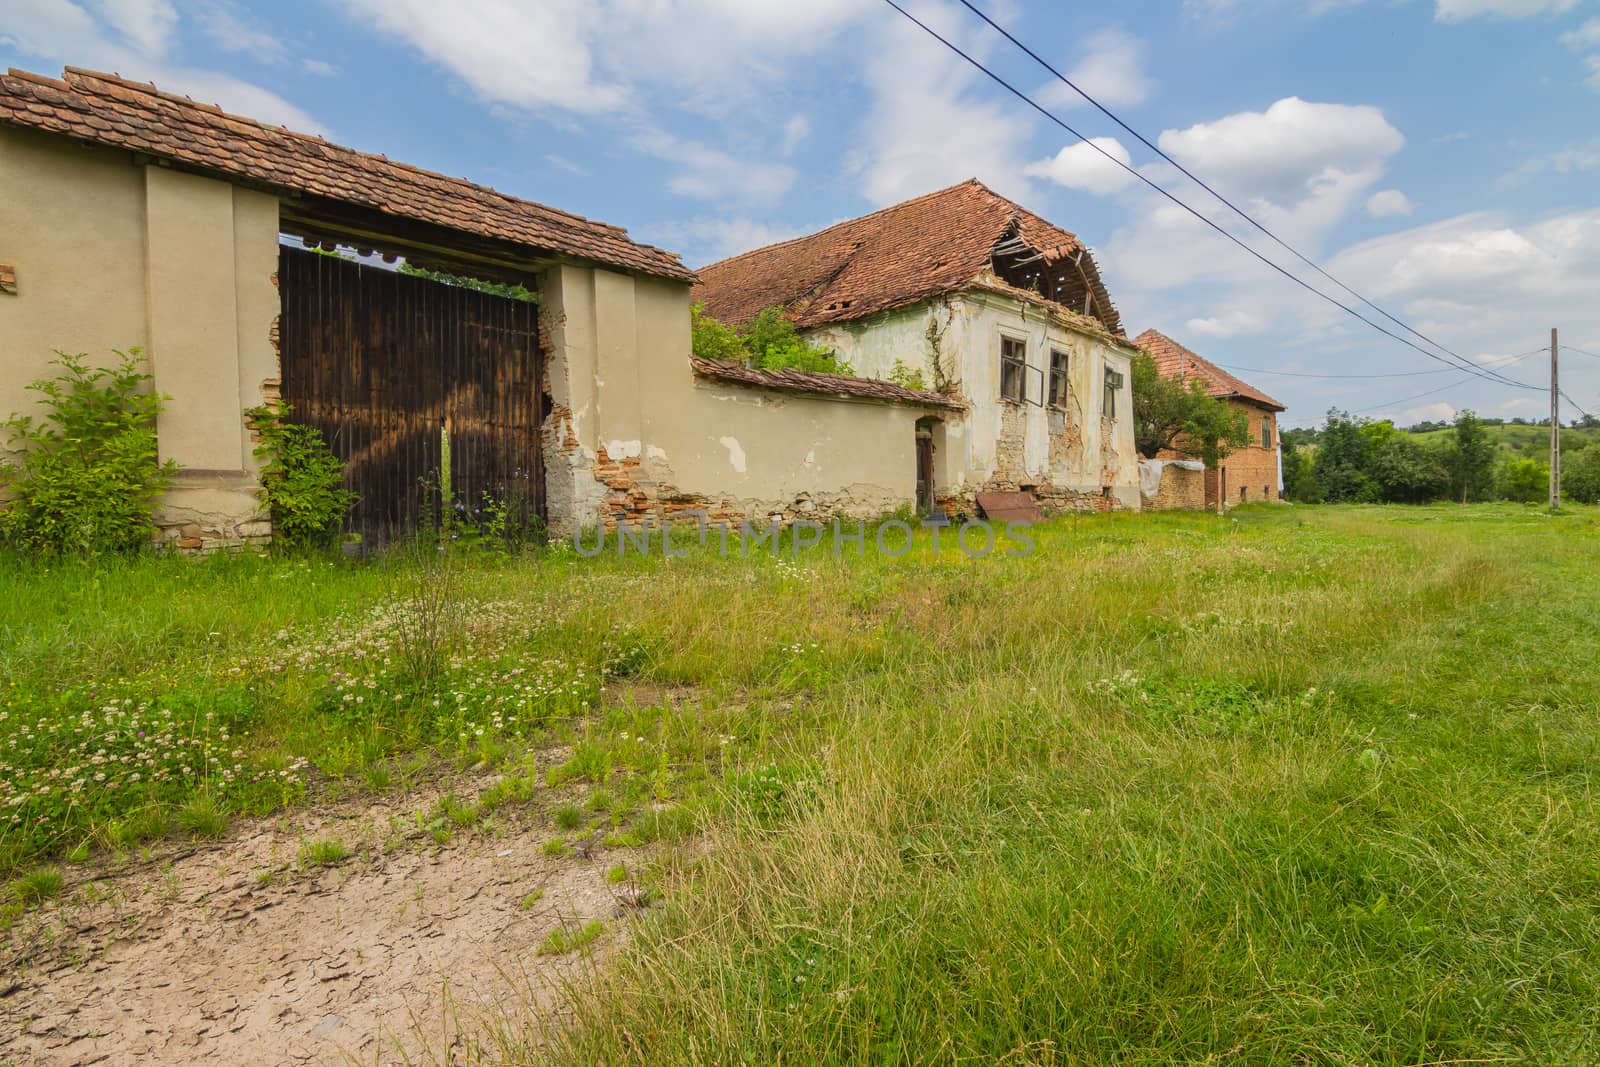 Abandoned village romania,outdoor shot